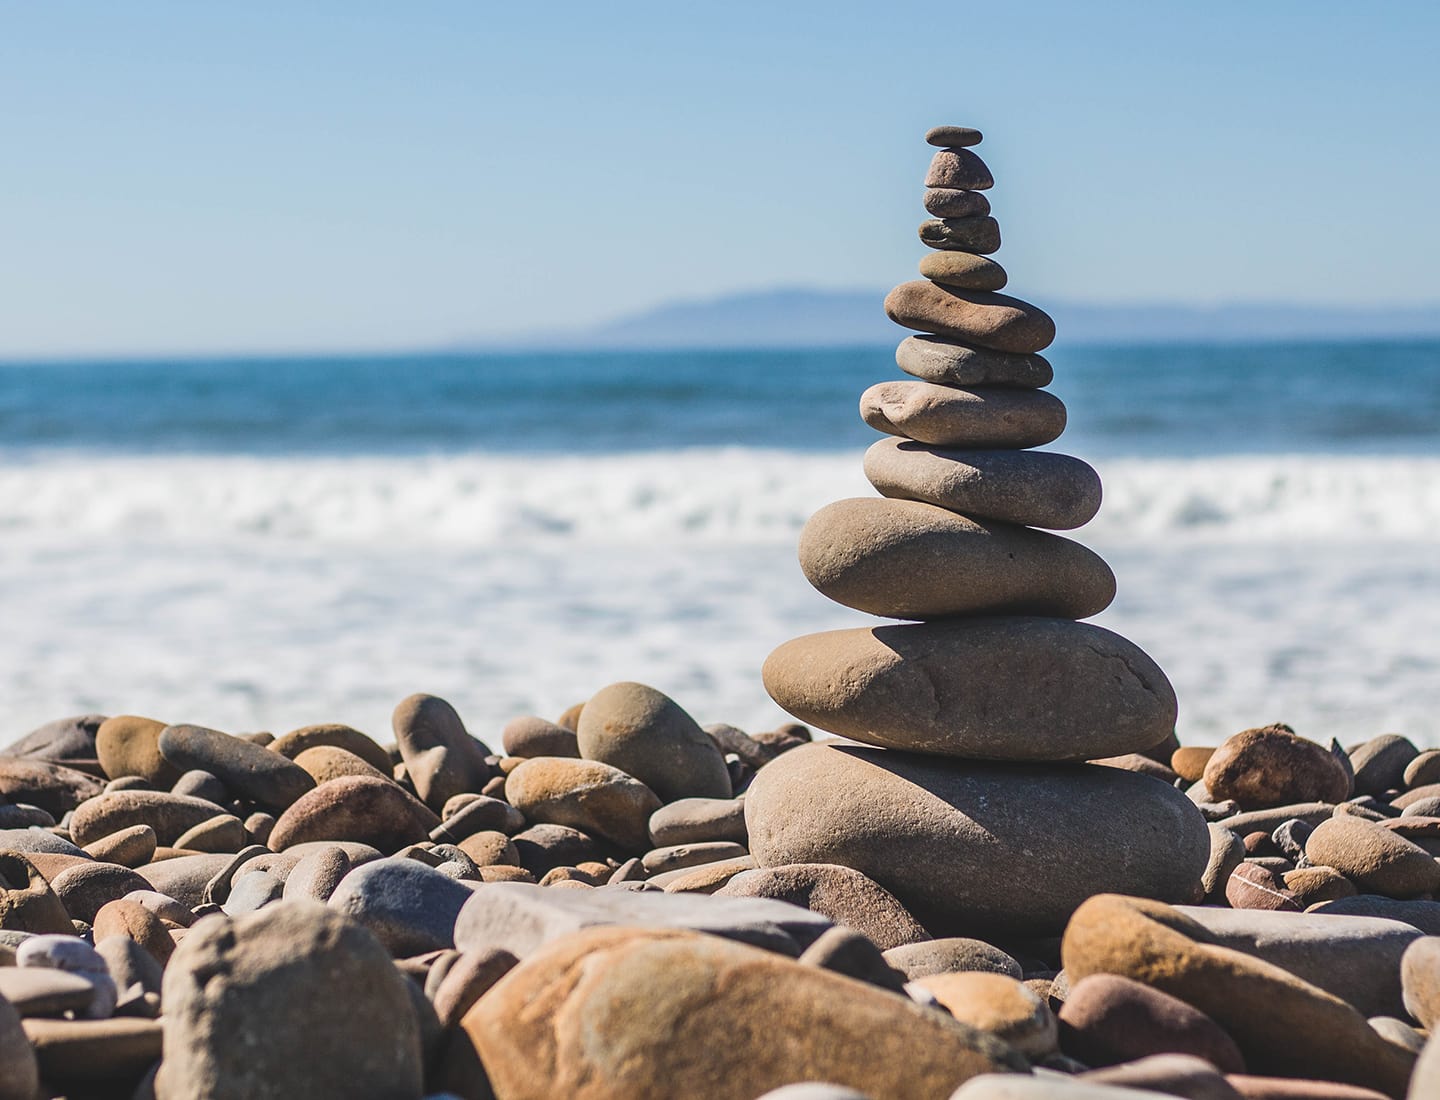 Balanced rocks by the ocean